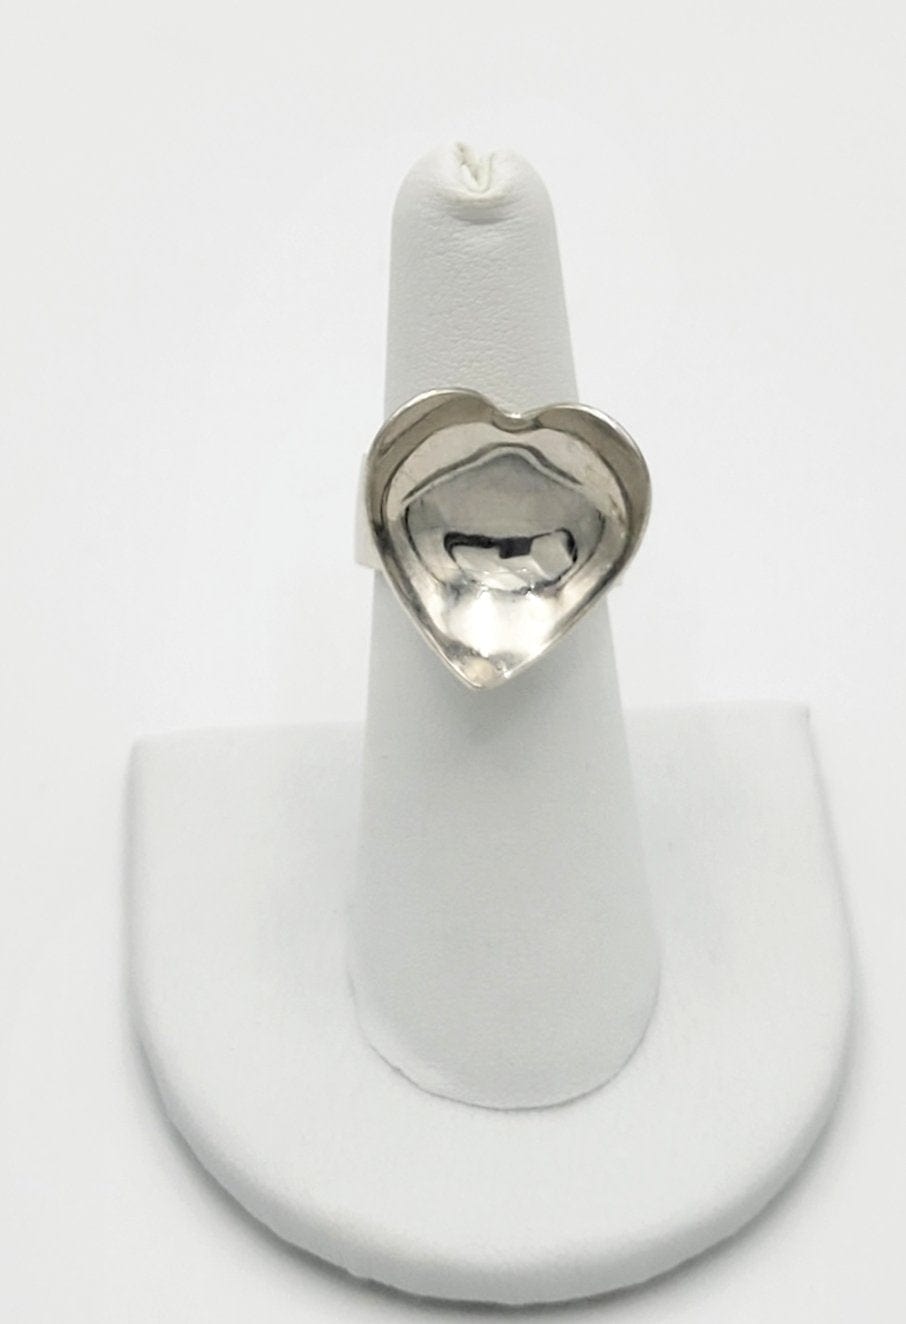 Peter Von Post Jewelry Vintage Swedish Designer Peter Von Post Sterling Silver Modernist Heart Face Ring